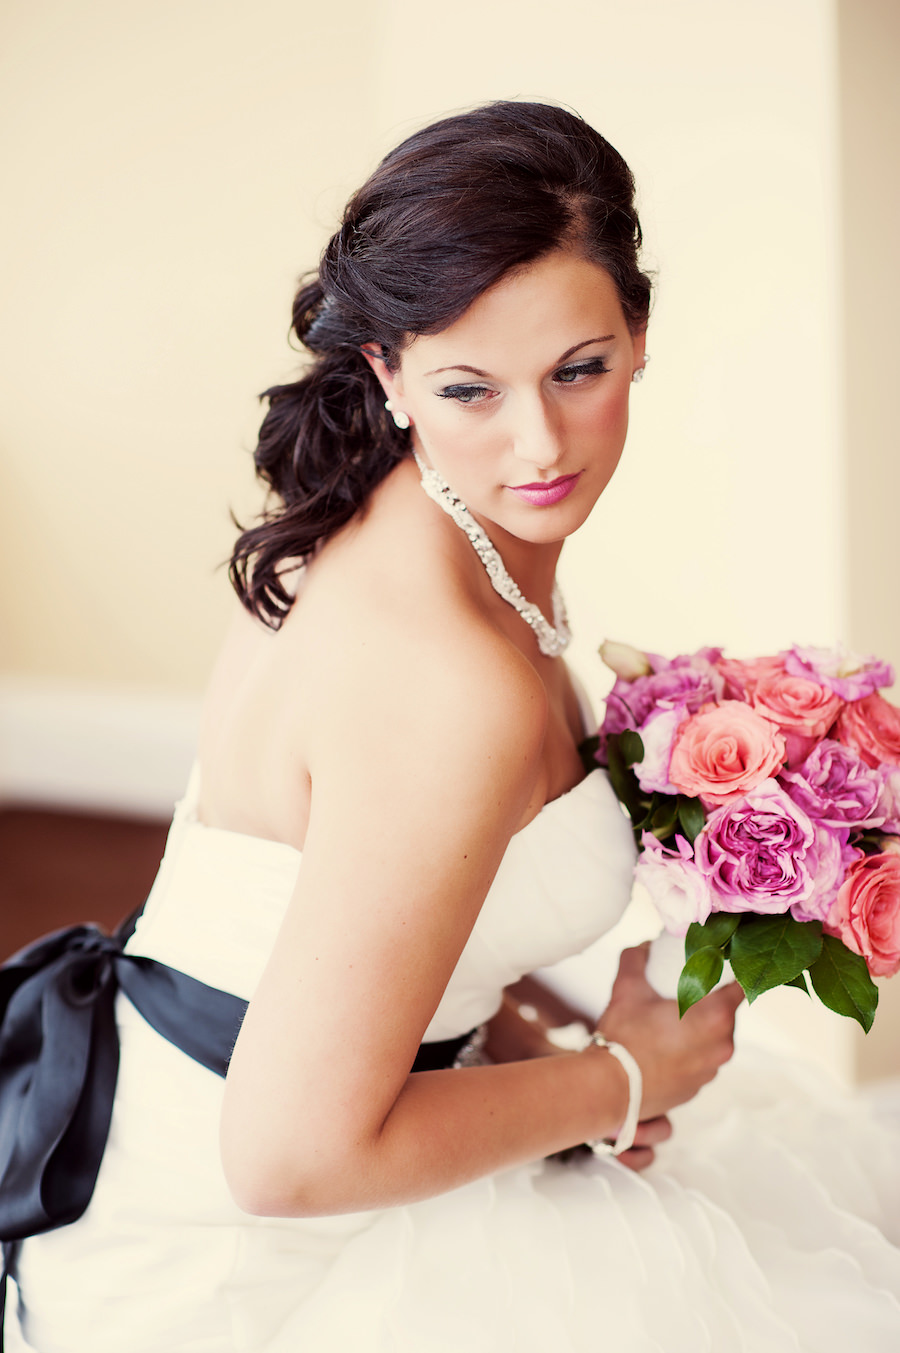 Florida Classic Bride Wedding Portrait with Pink, Purple Wedding Bouquet and Black Sash on Wedding Dress | Tampa Bay Wedding Photographer Alexi Shields Photography